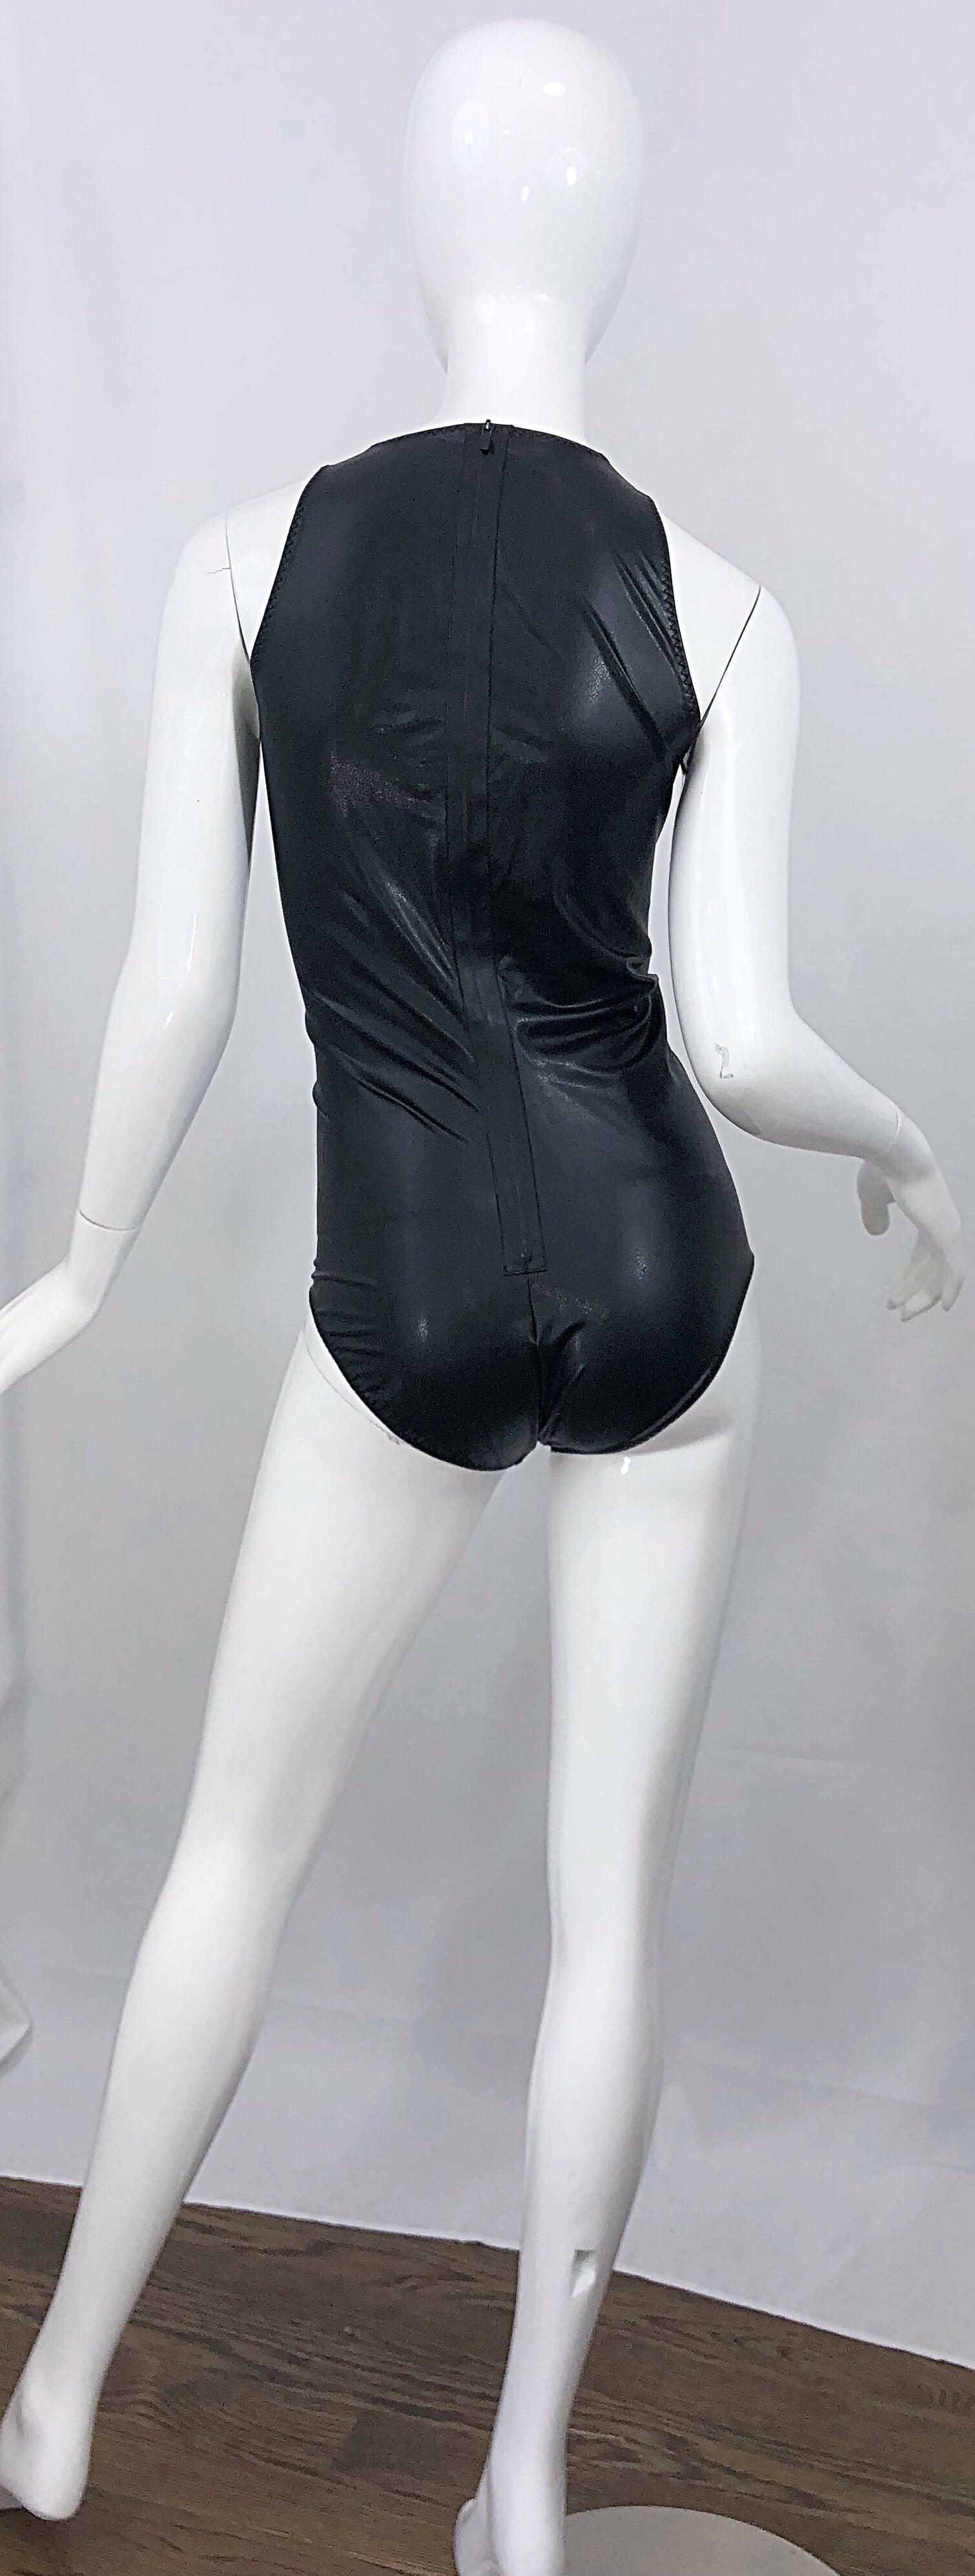 dominatrix bodysuit